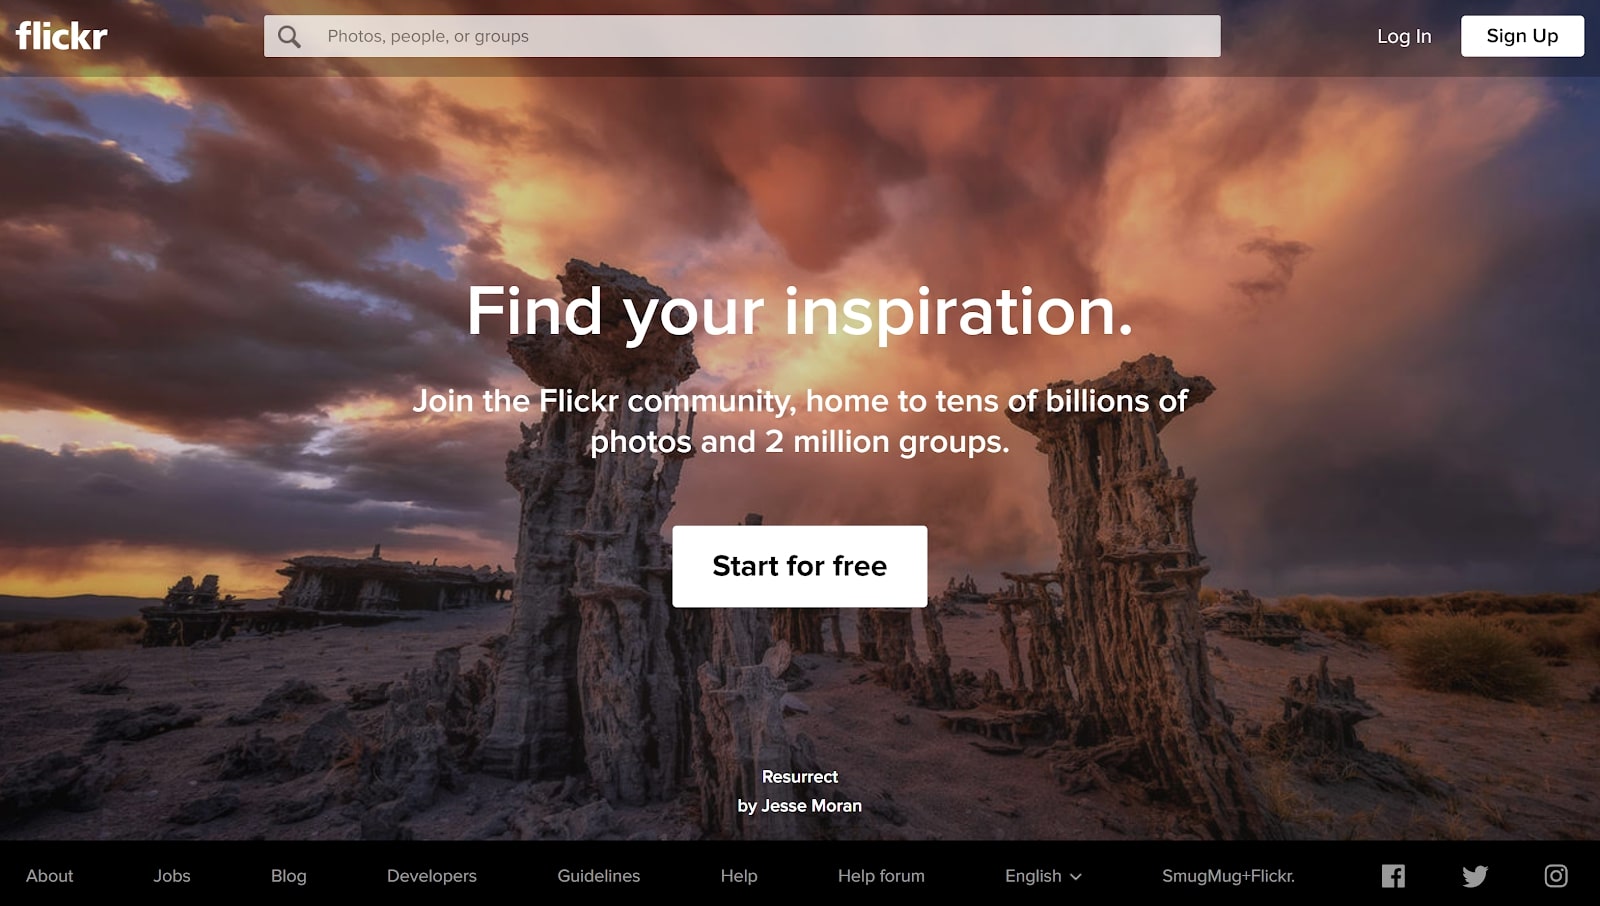 Flickr's homepage